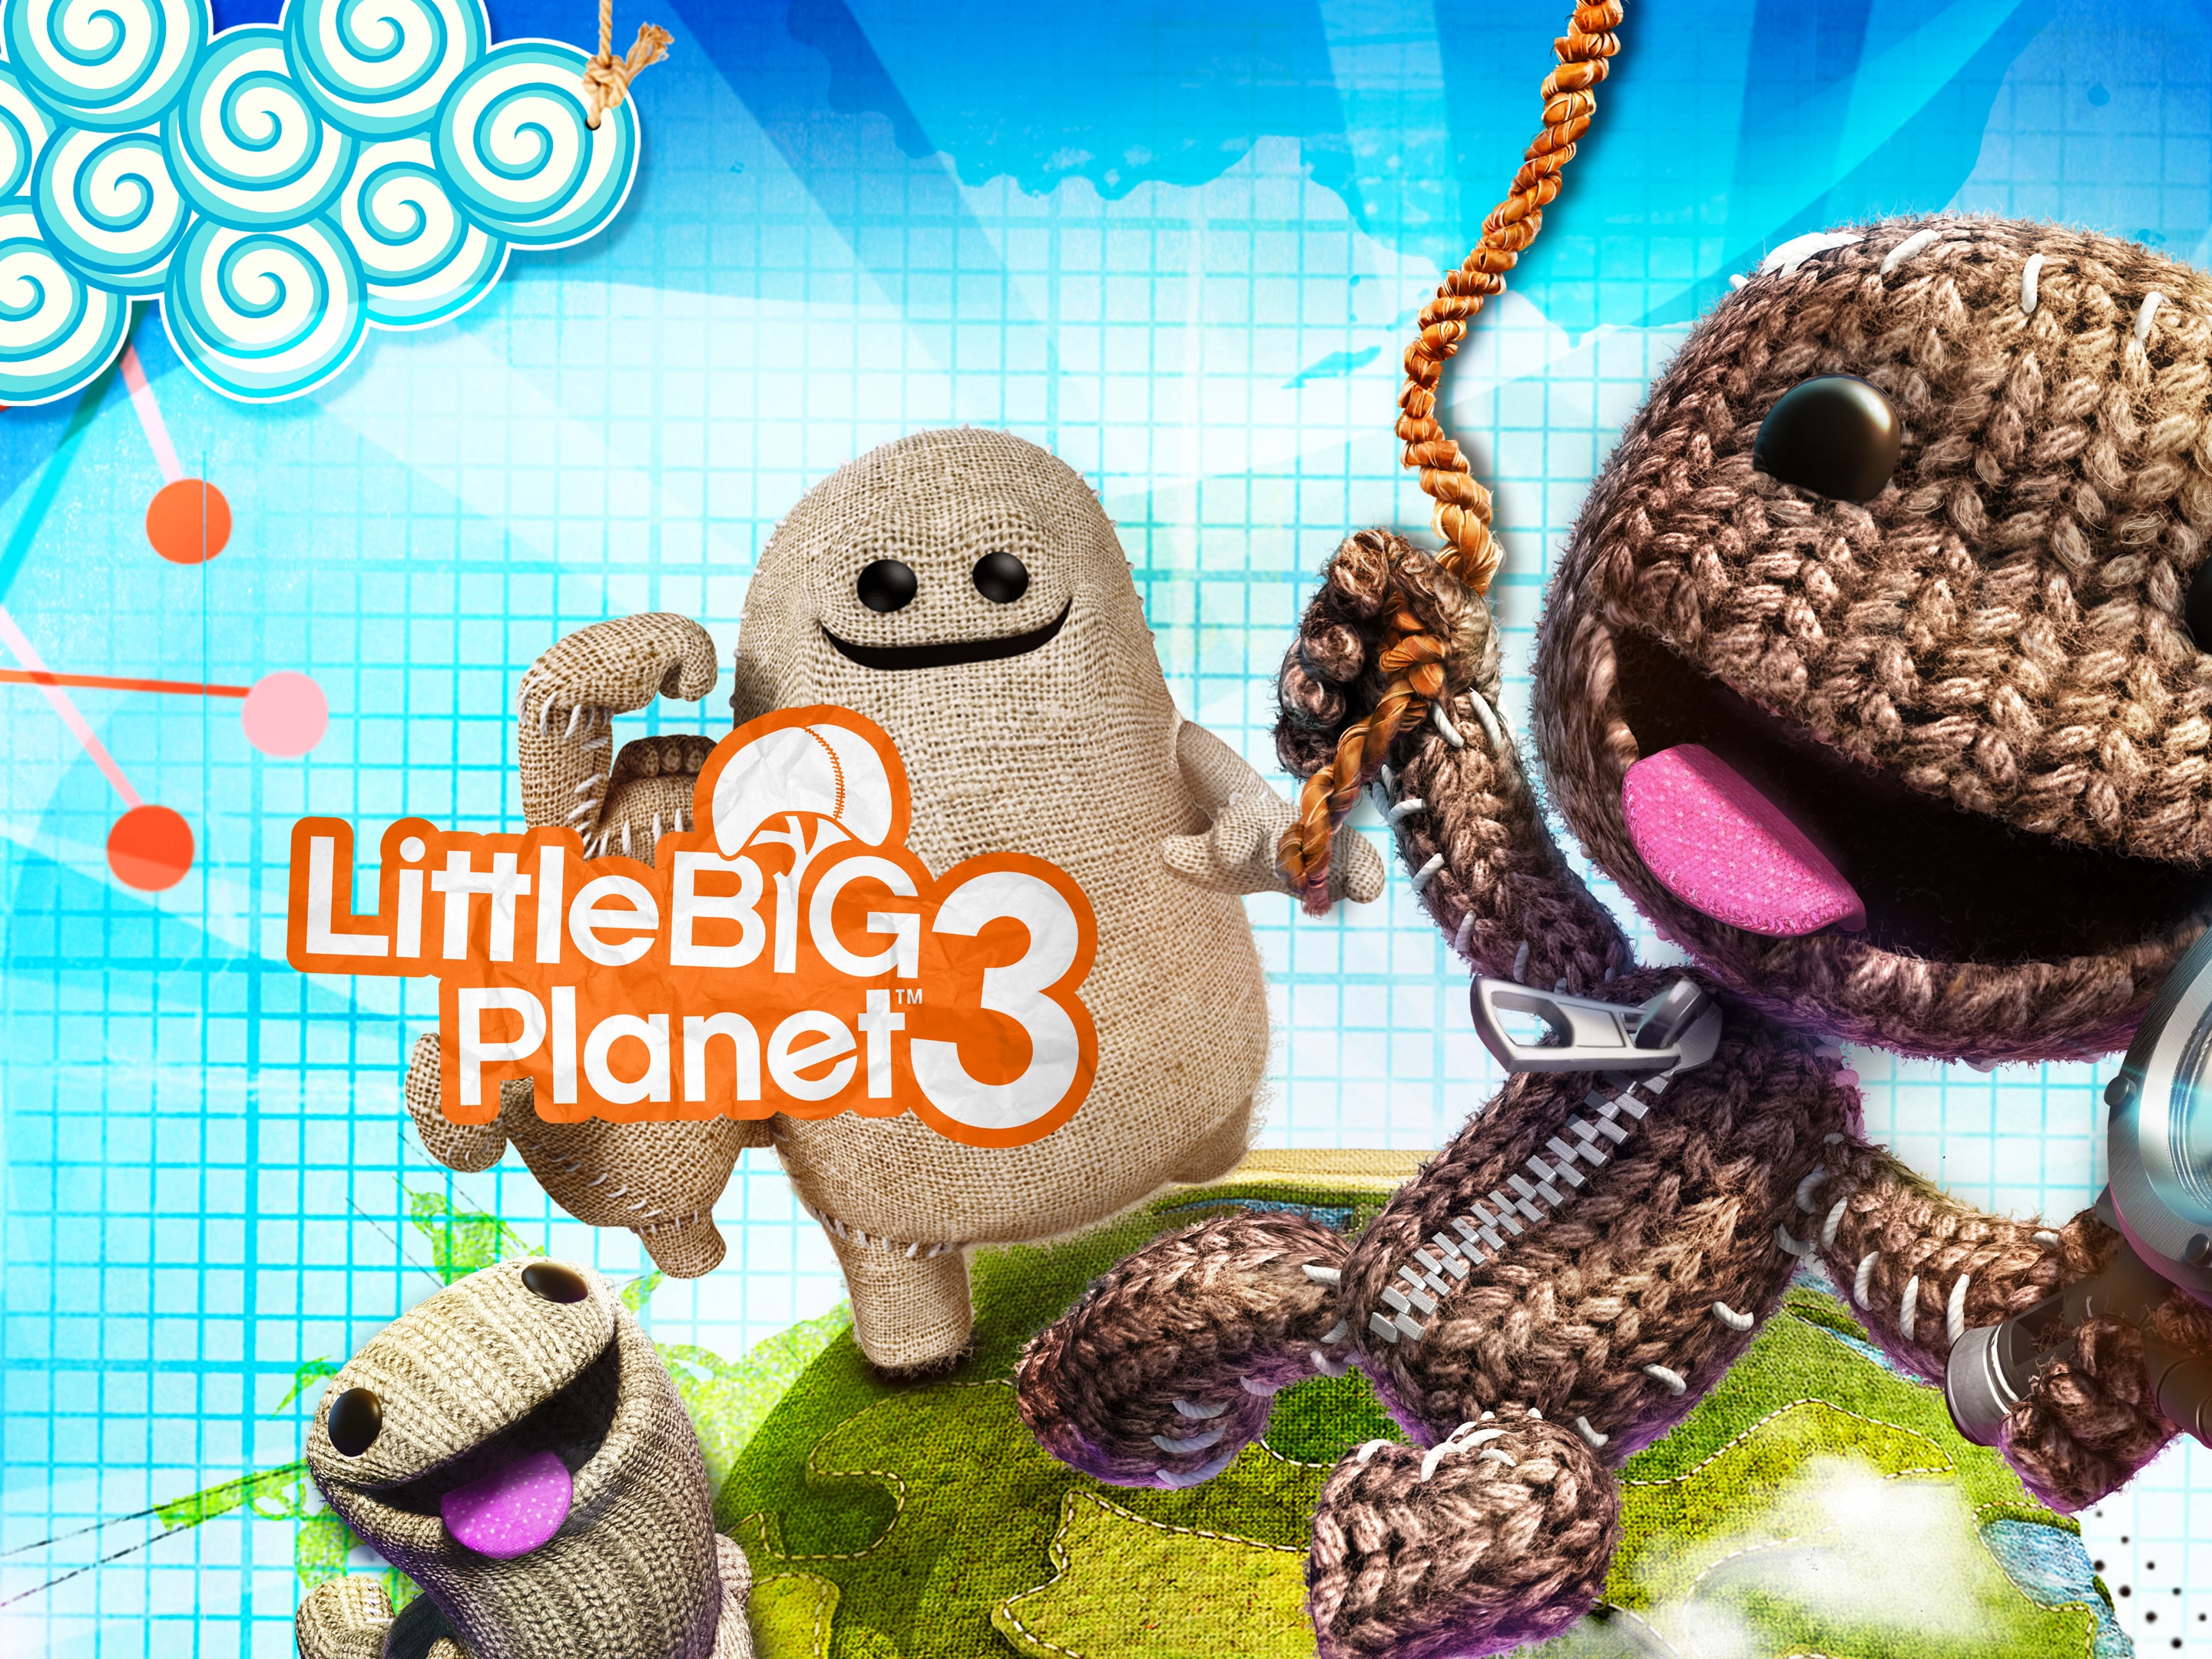 LittleBigPlanet™ 3